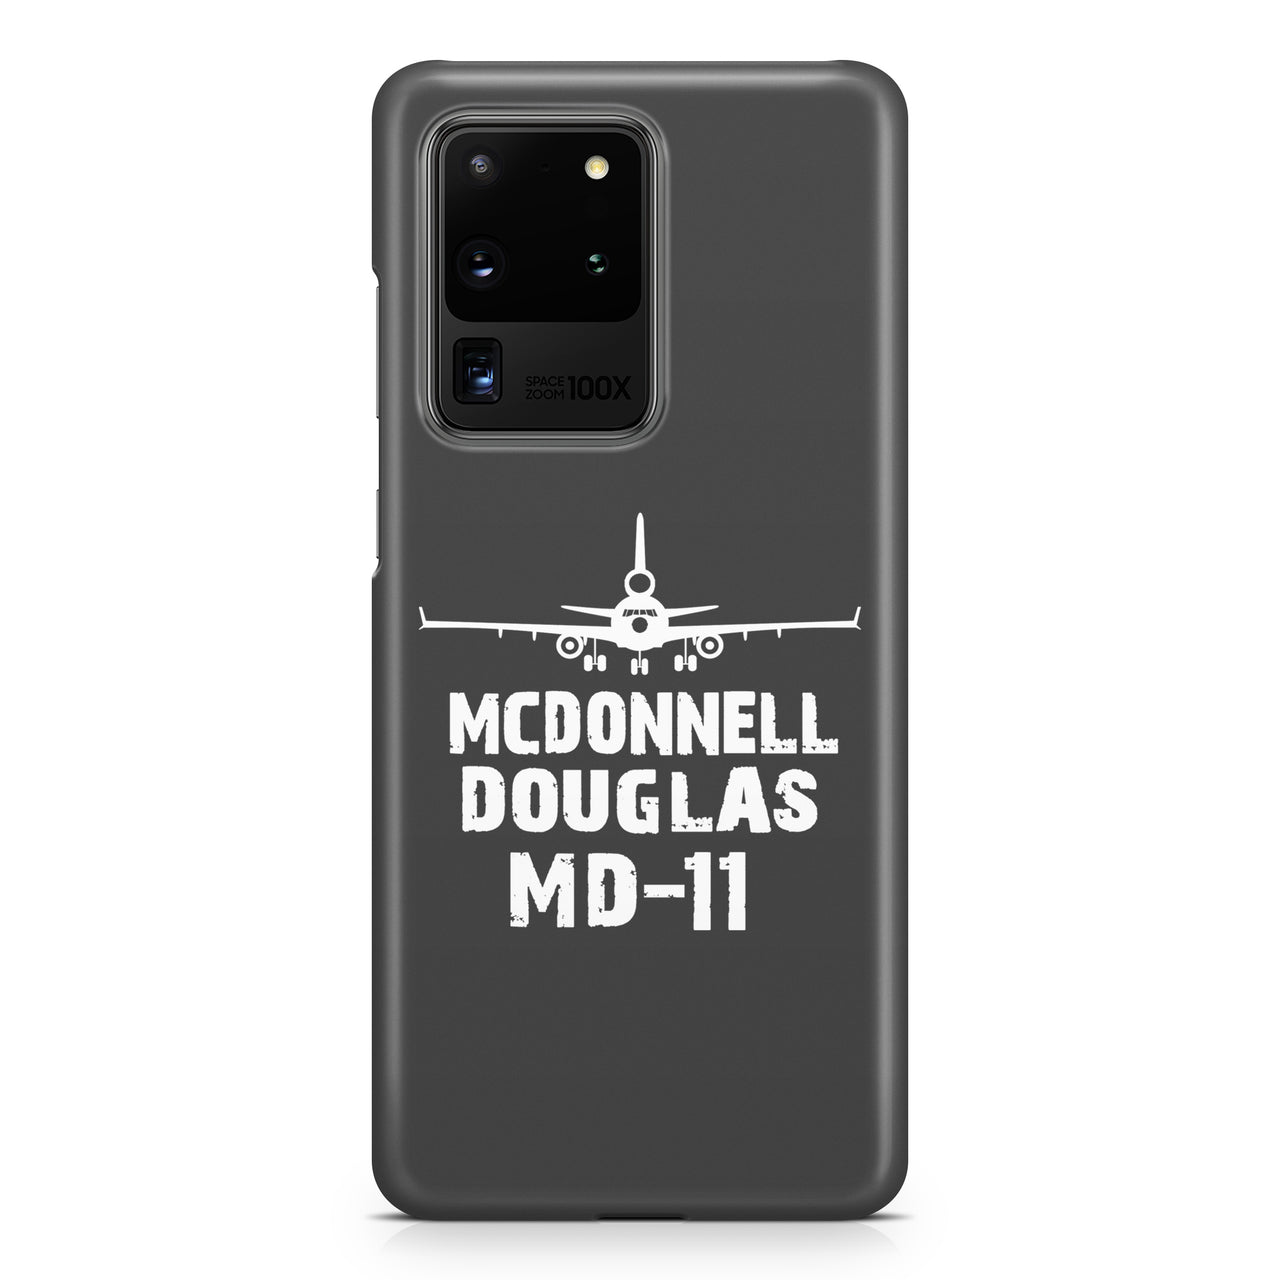 McDonnell Douglas MD-11 & Plane Samsung A Cases